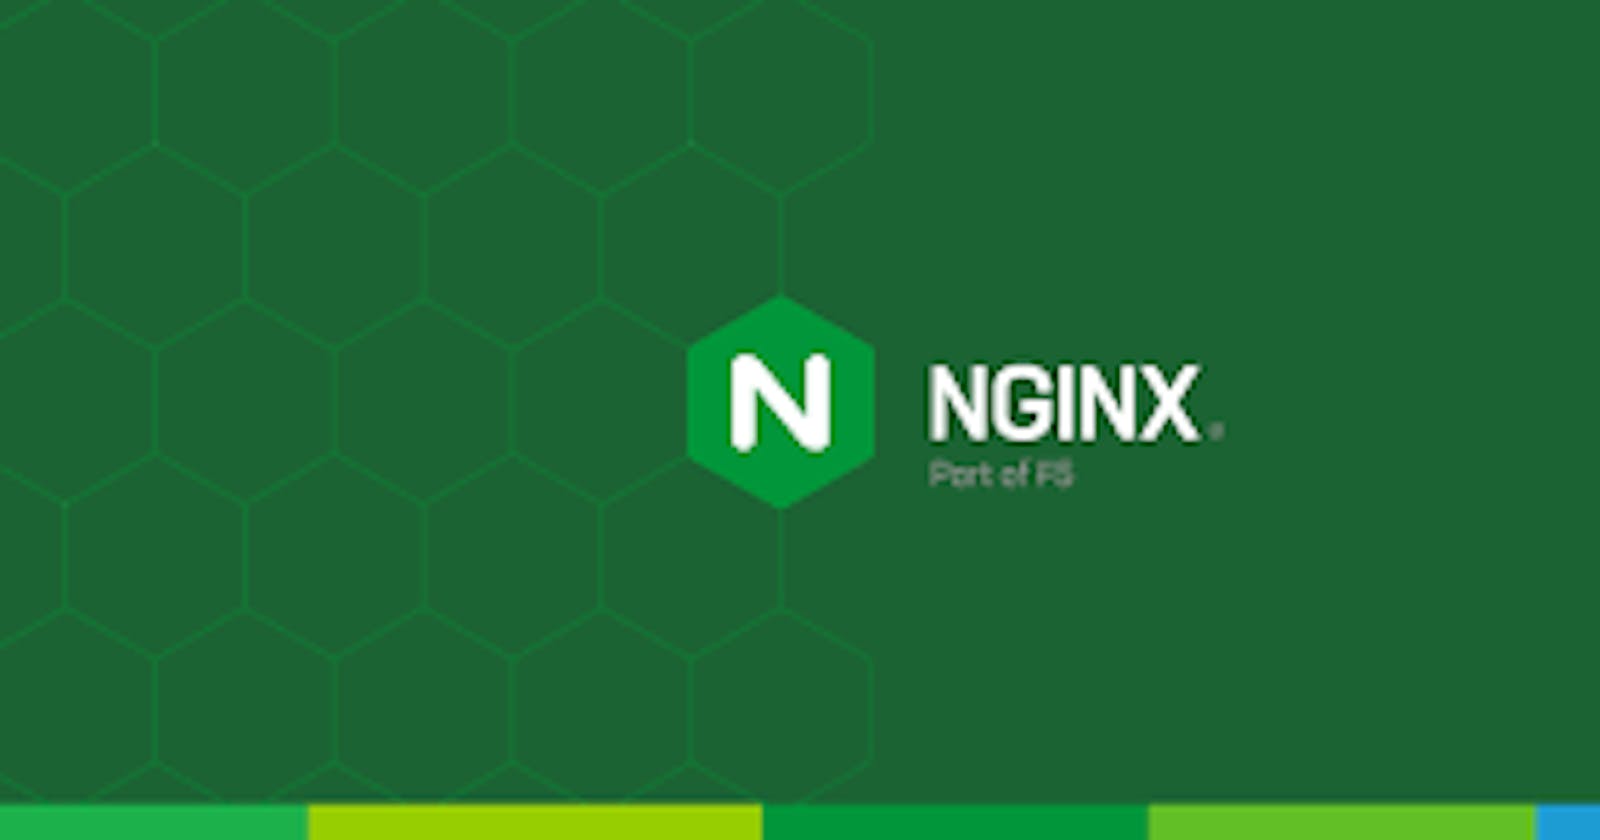 Nginx as a web server and a load balancer